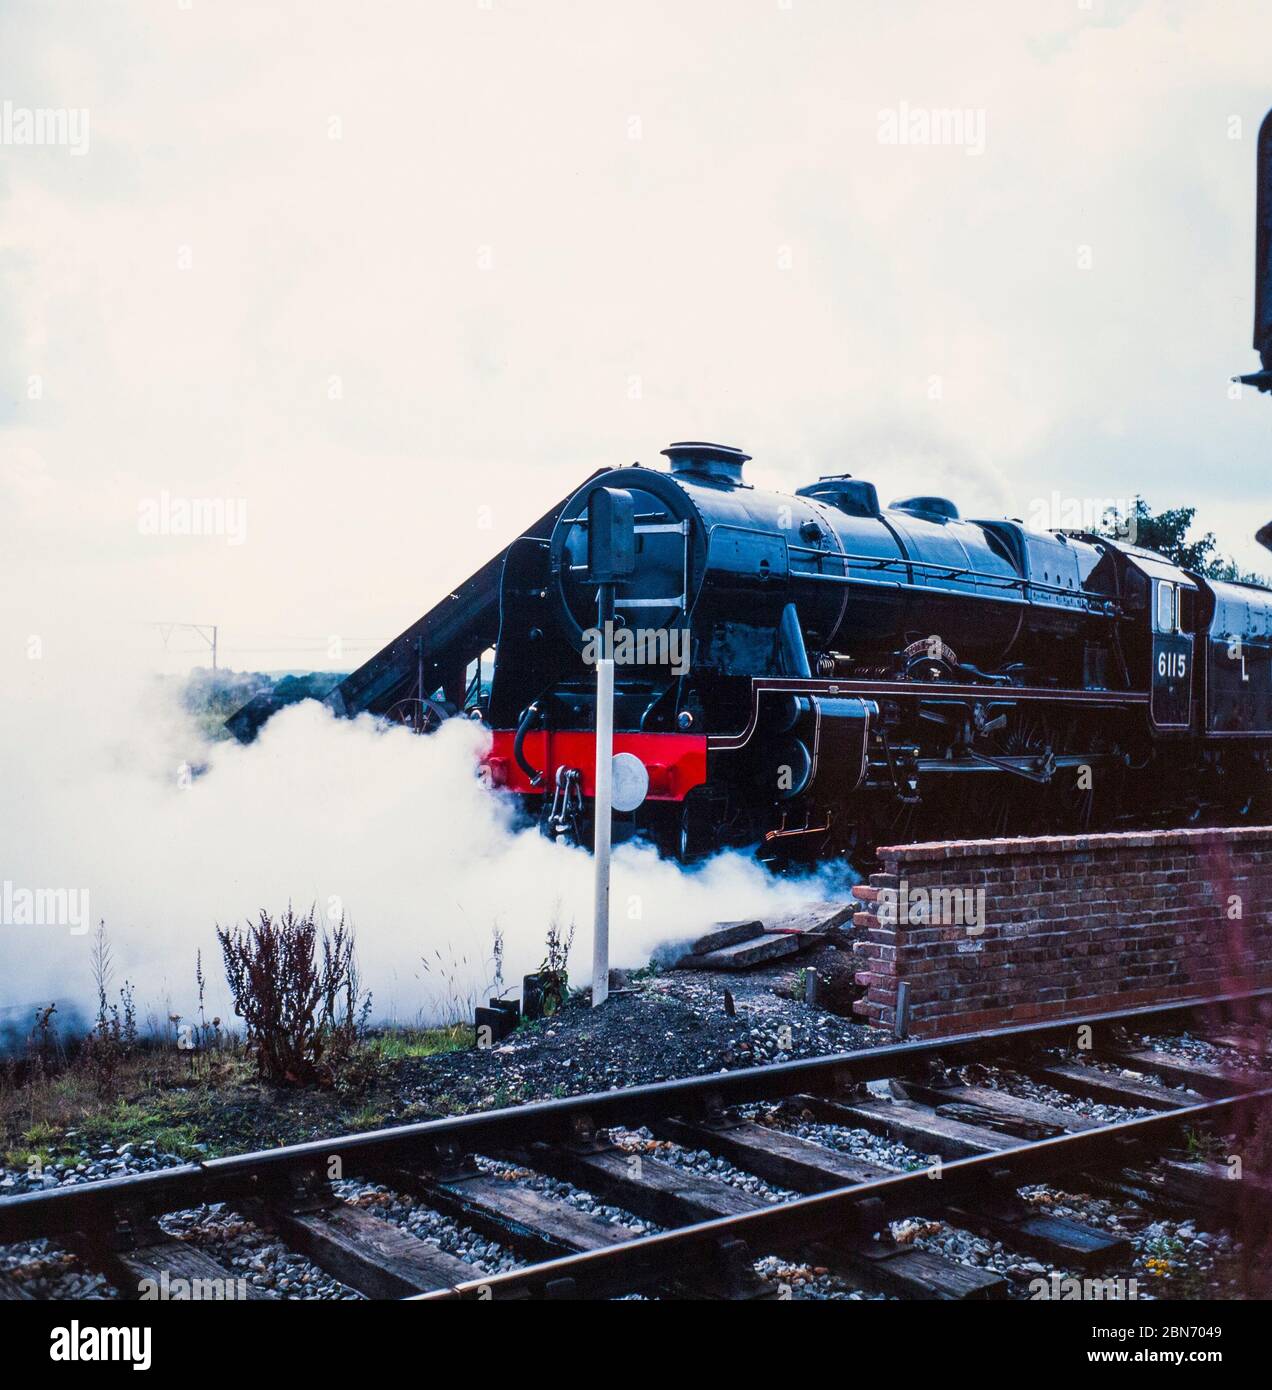 The Scots Guardsman Steam Locomotive 6115 fueling up, England, UK. Stock Photo